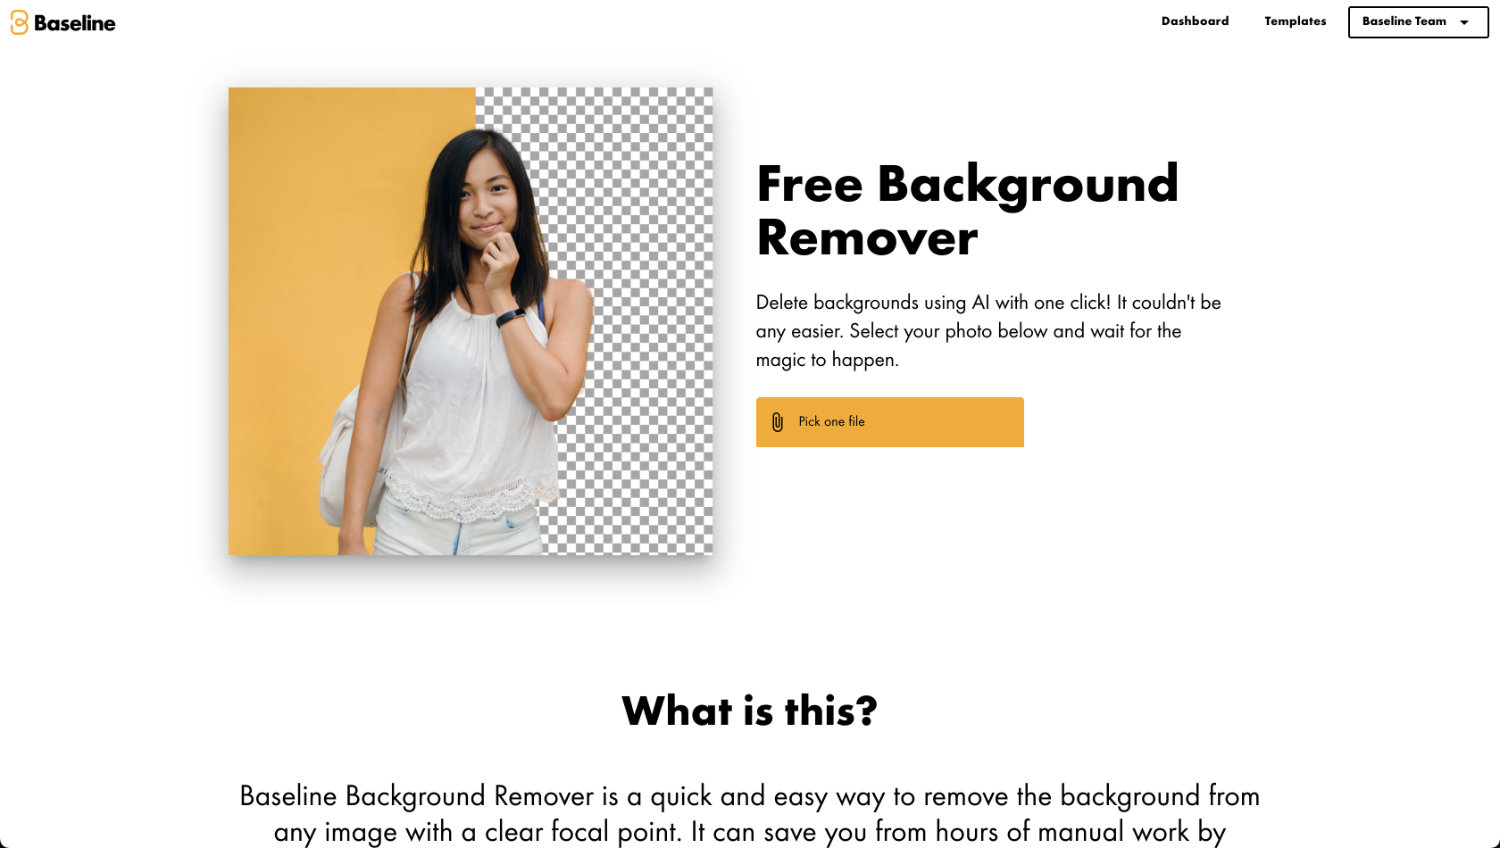 Free Background Remover | Baseline